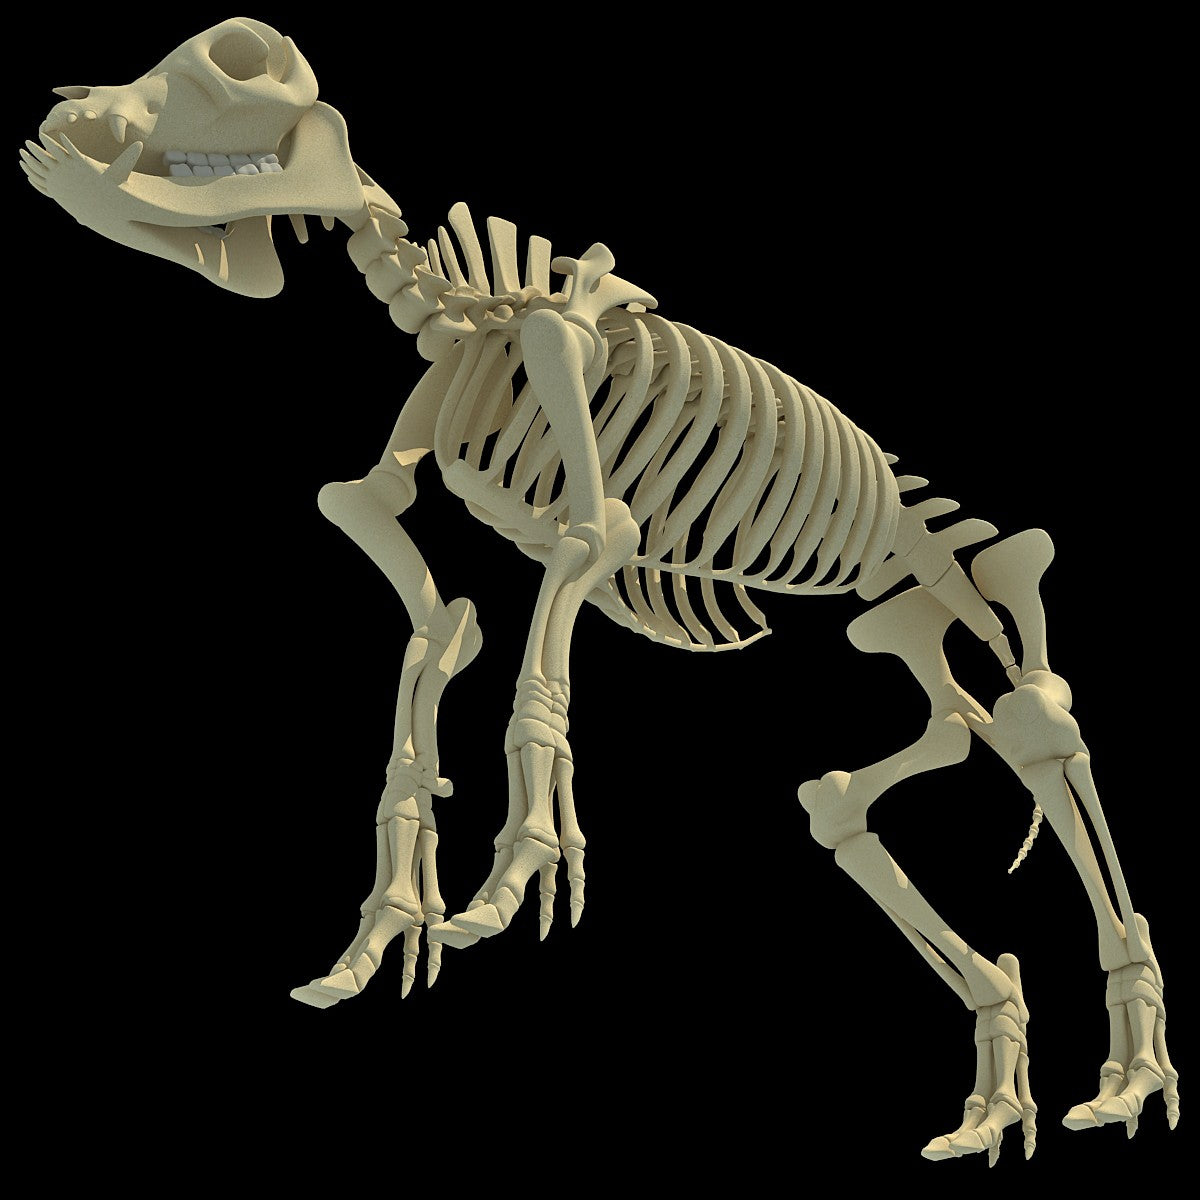 Pig Skeleton